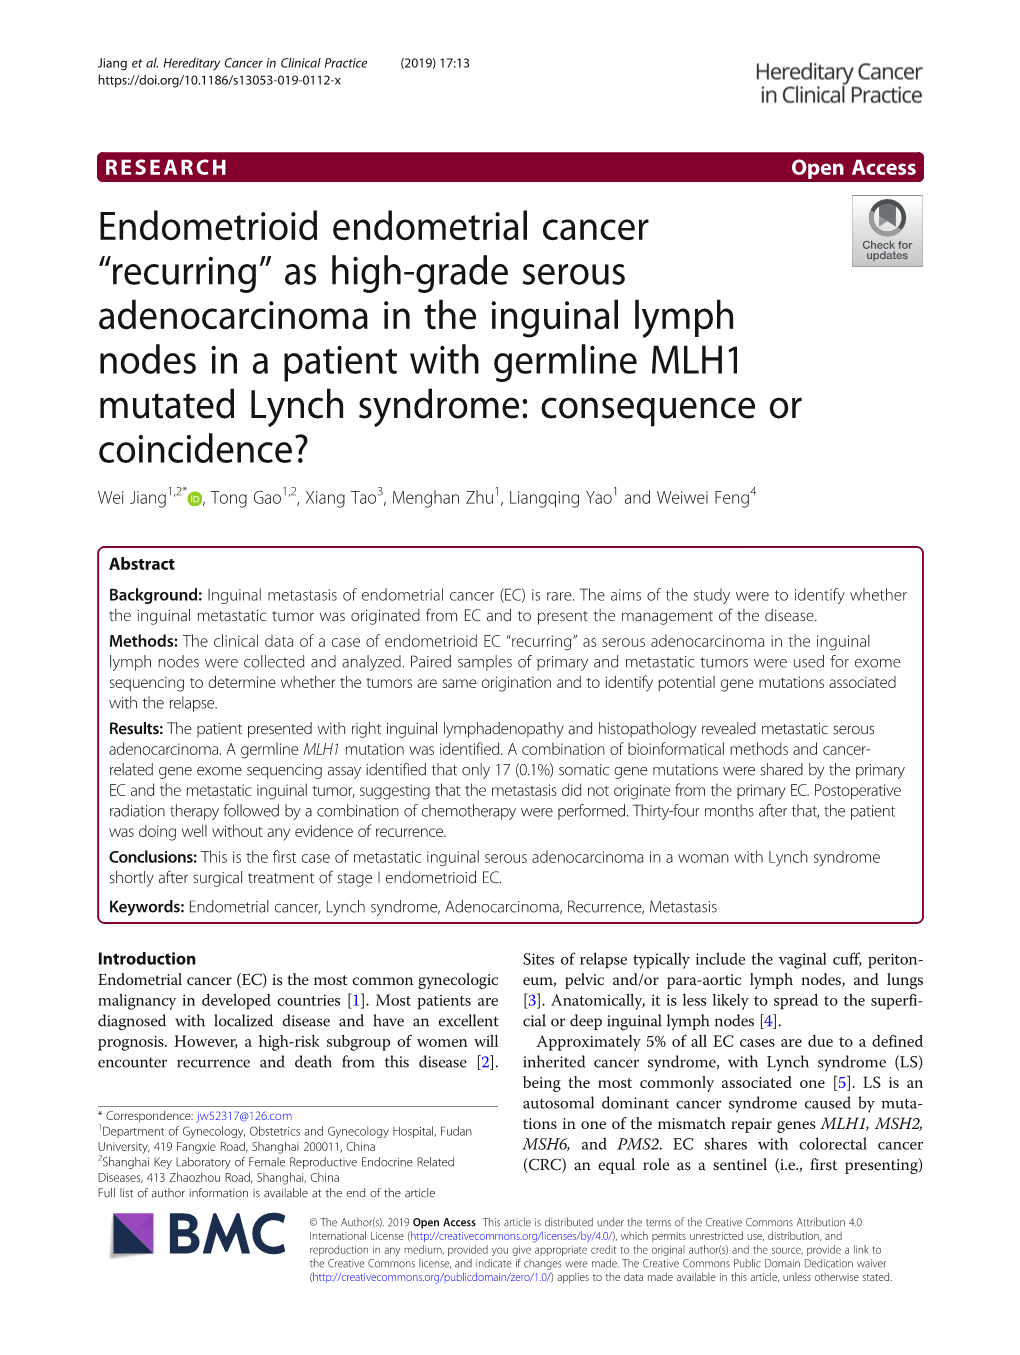 Endometrioid Endometrial Cancer